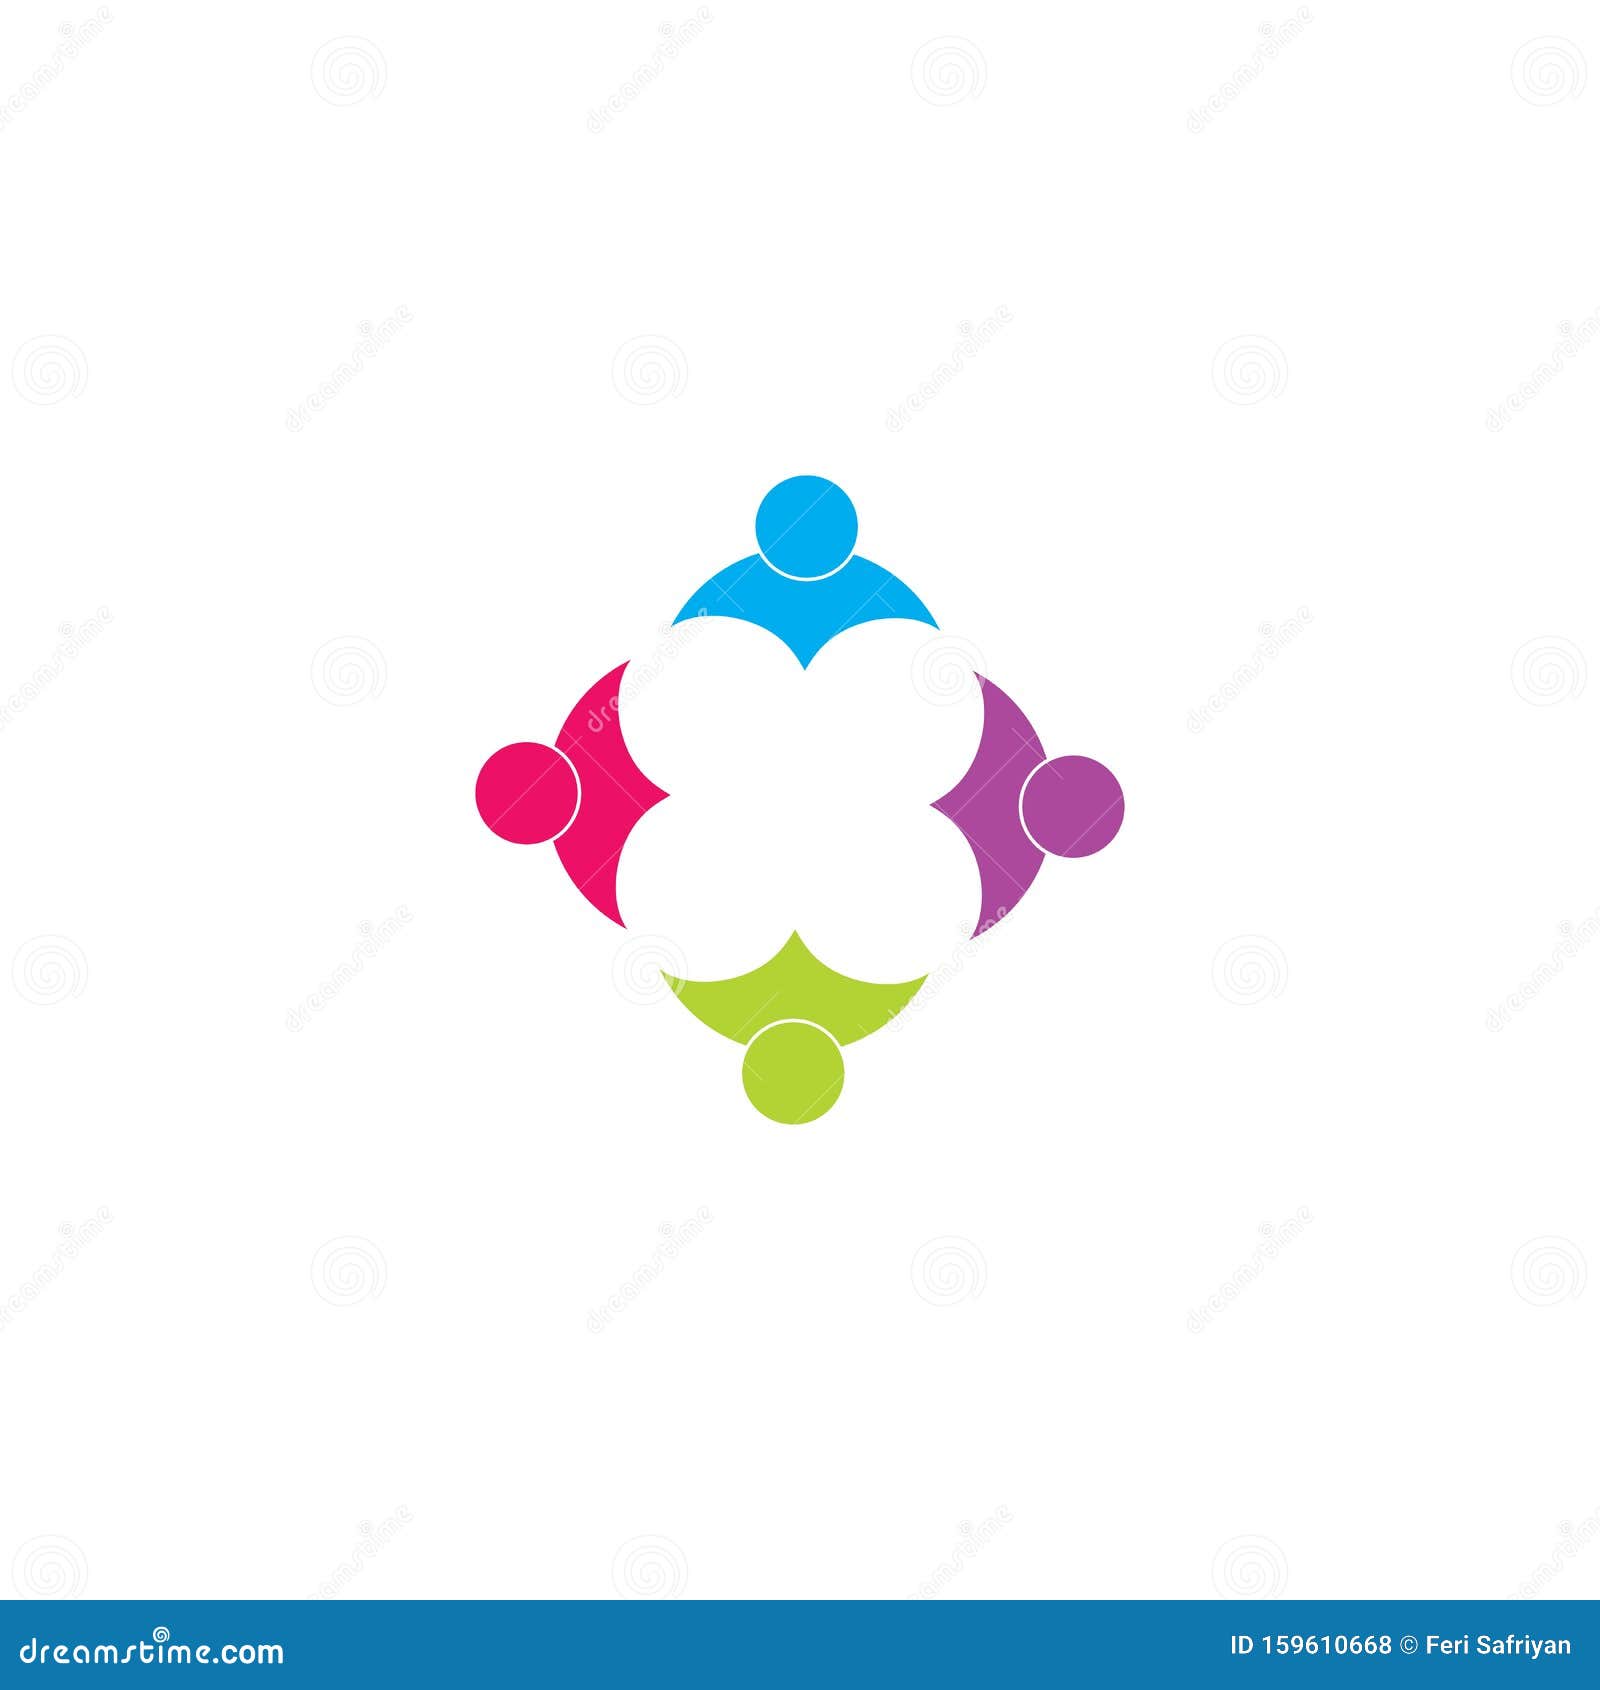 Community logo template stock vector. Illustration of circle - 159610668